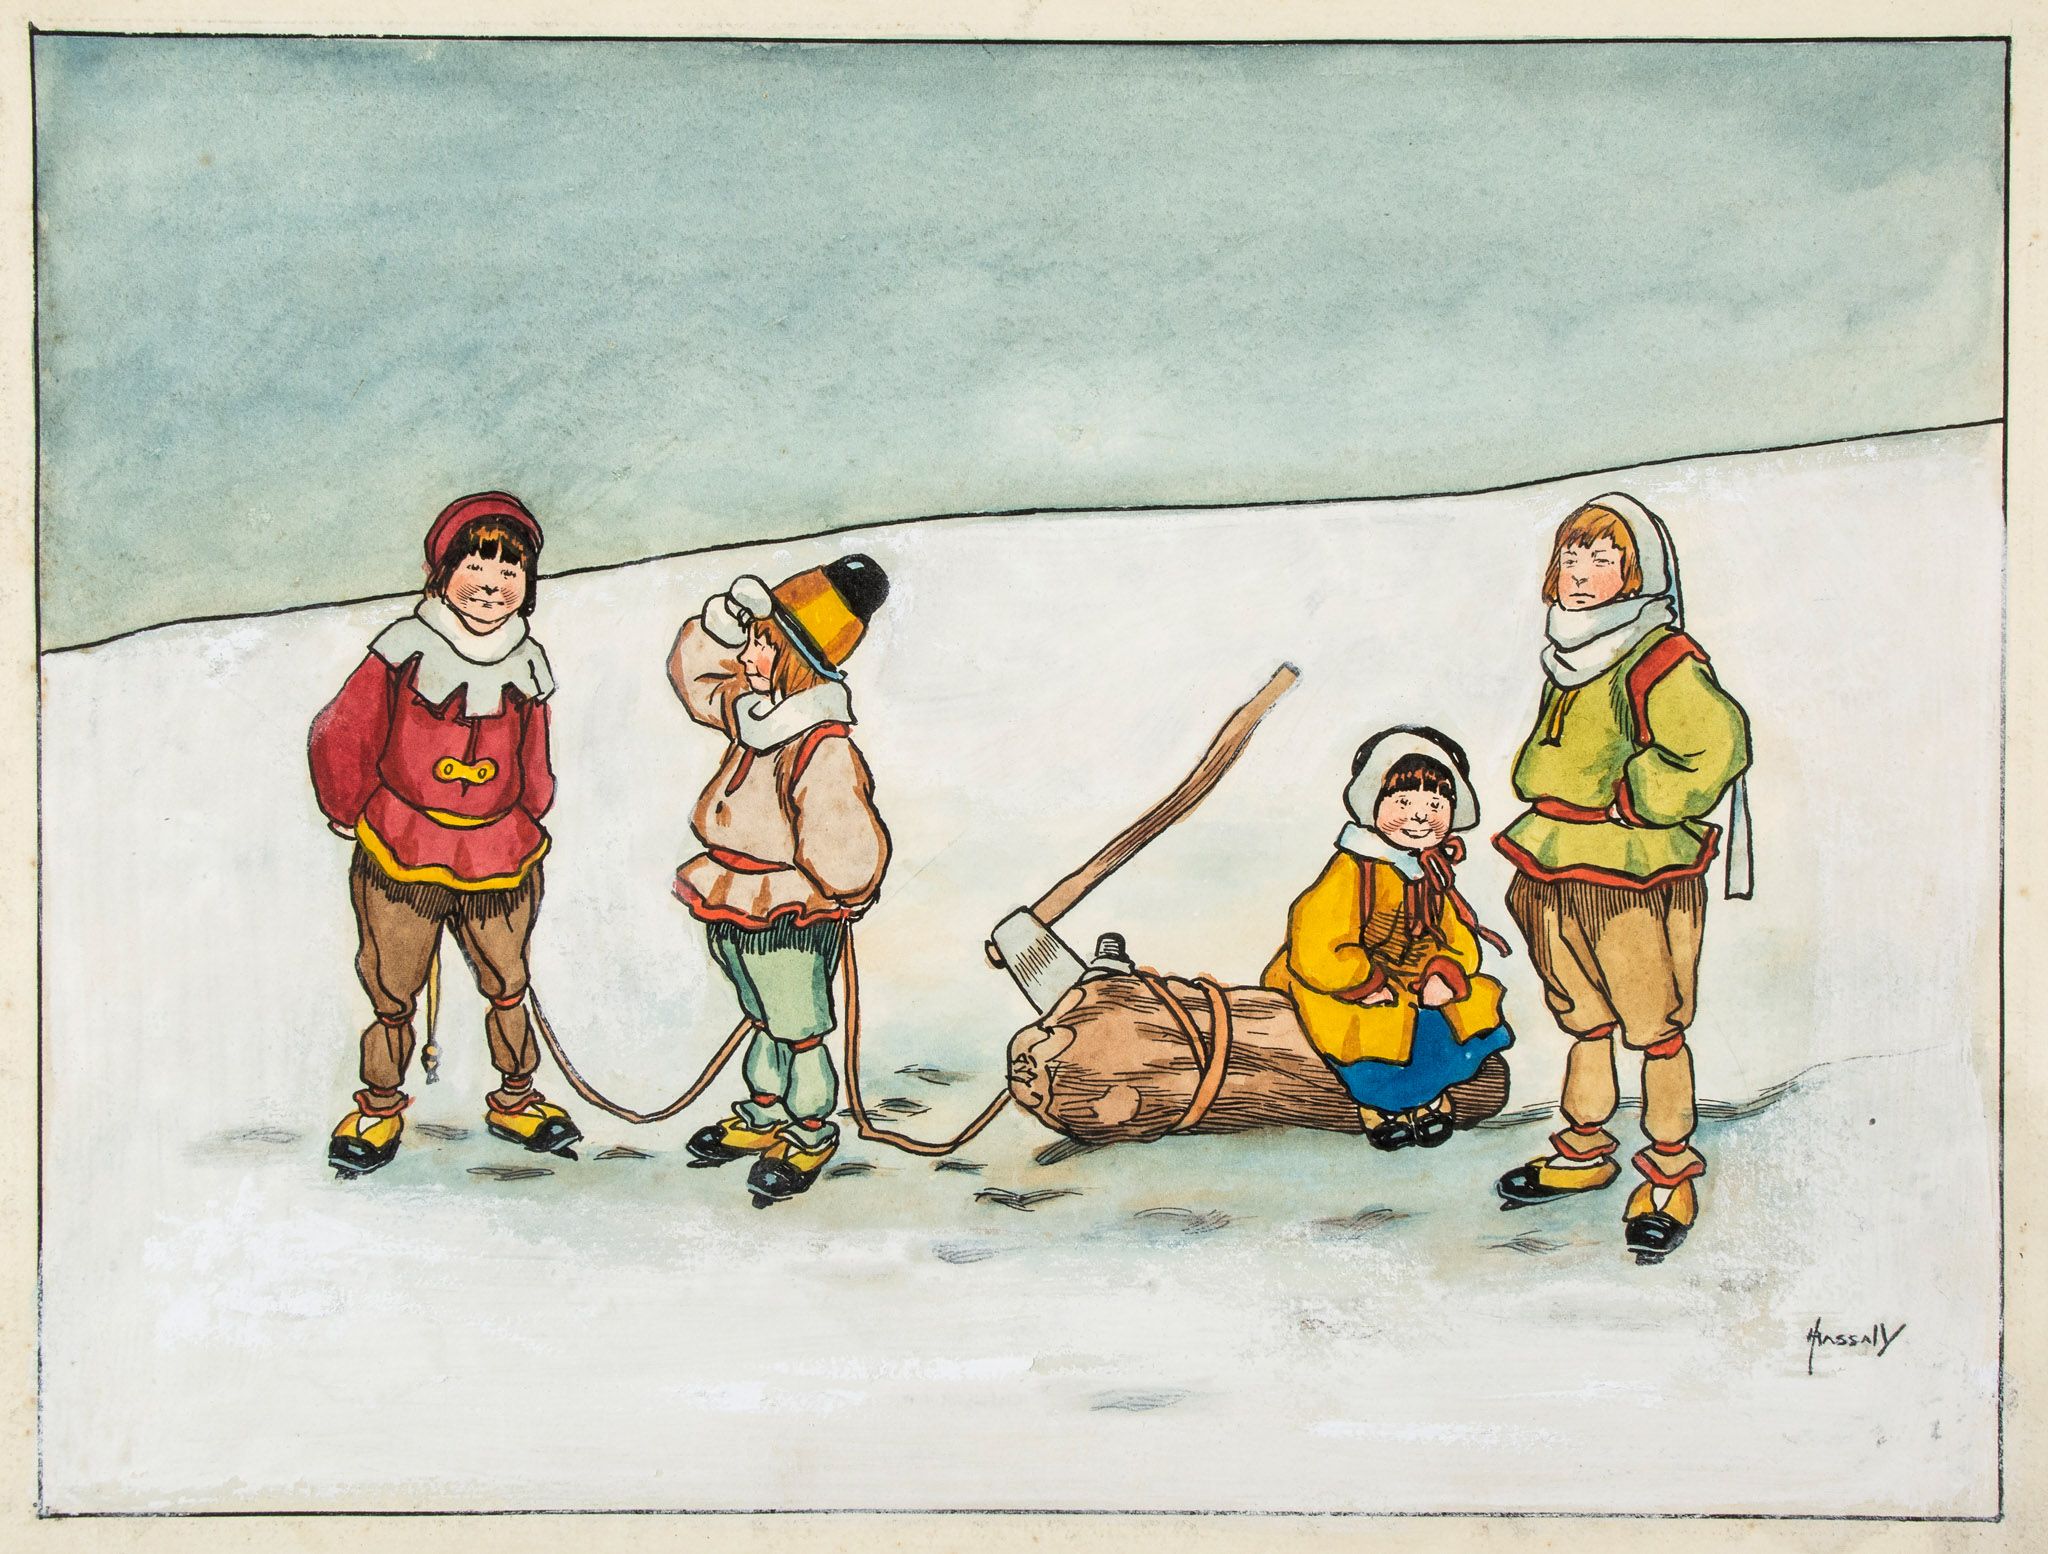 Hassall (John) - Children in a snow scene,  original watercolour on paper, four young children in